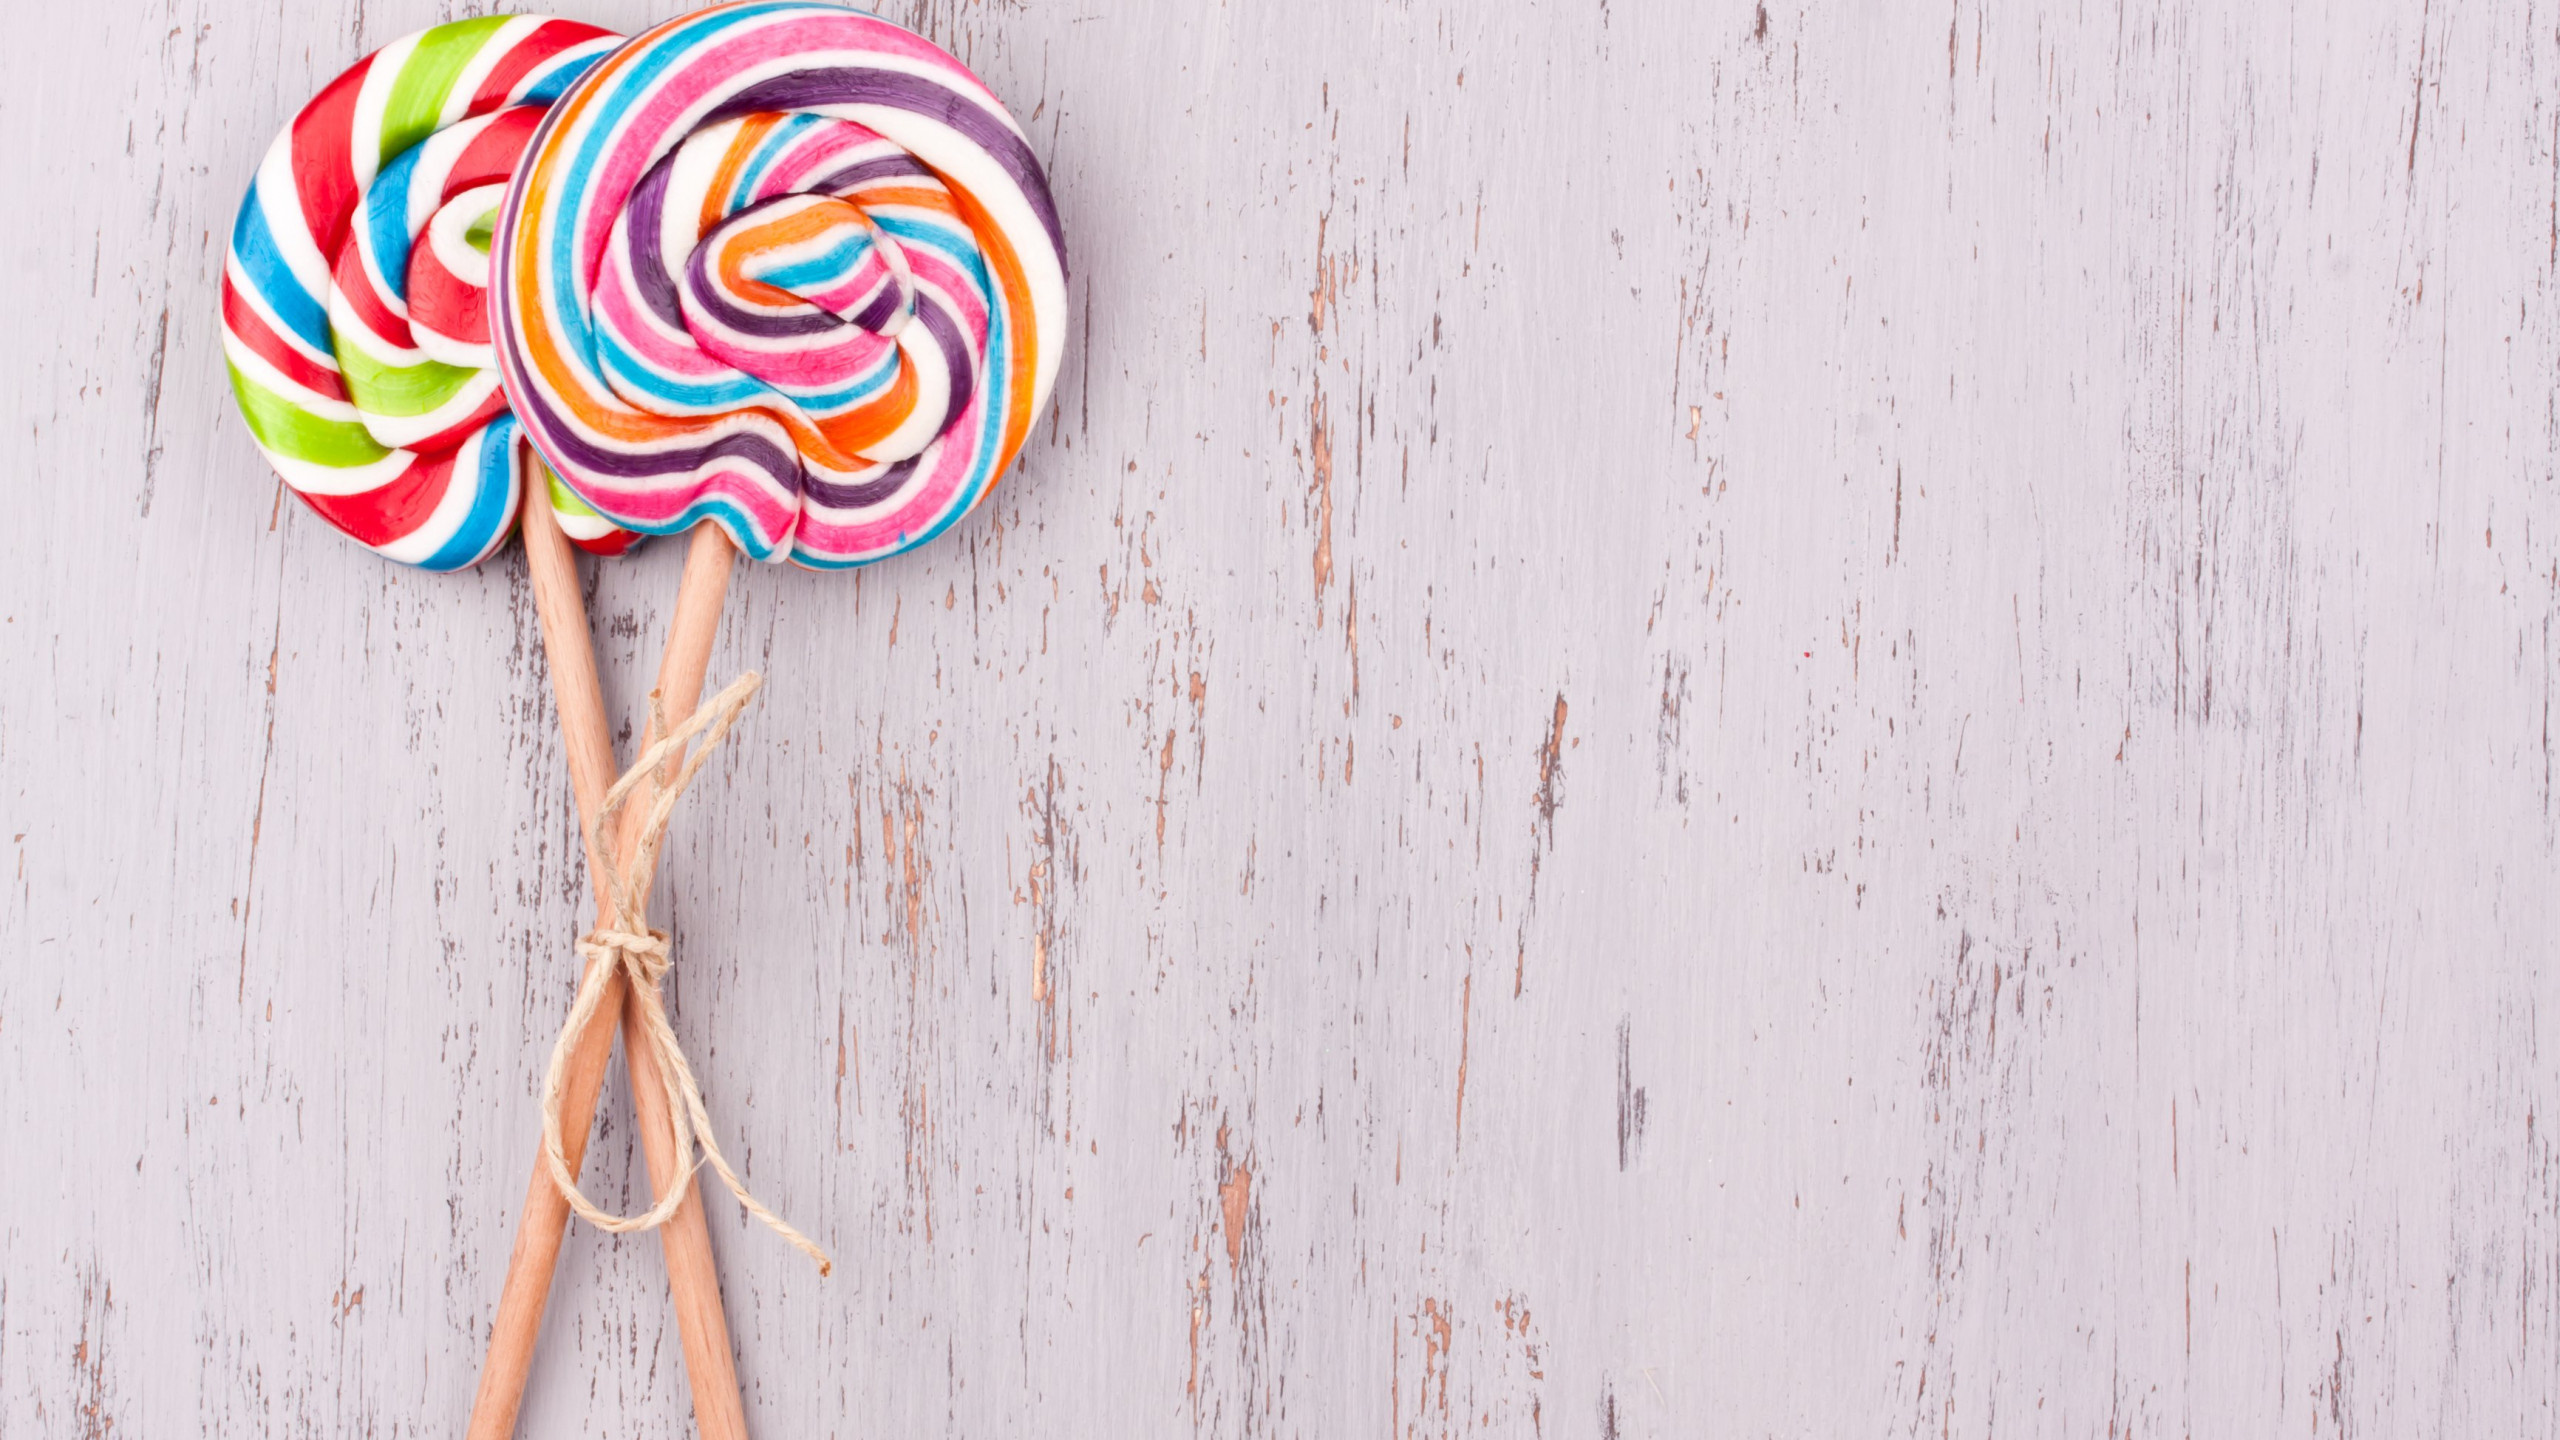 Lollipop background wallpaper, Eye-catching design, Sweet temptation, Candy lover's delight, 2560x1440 HD Desktop